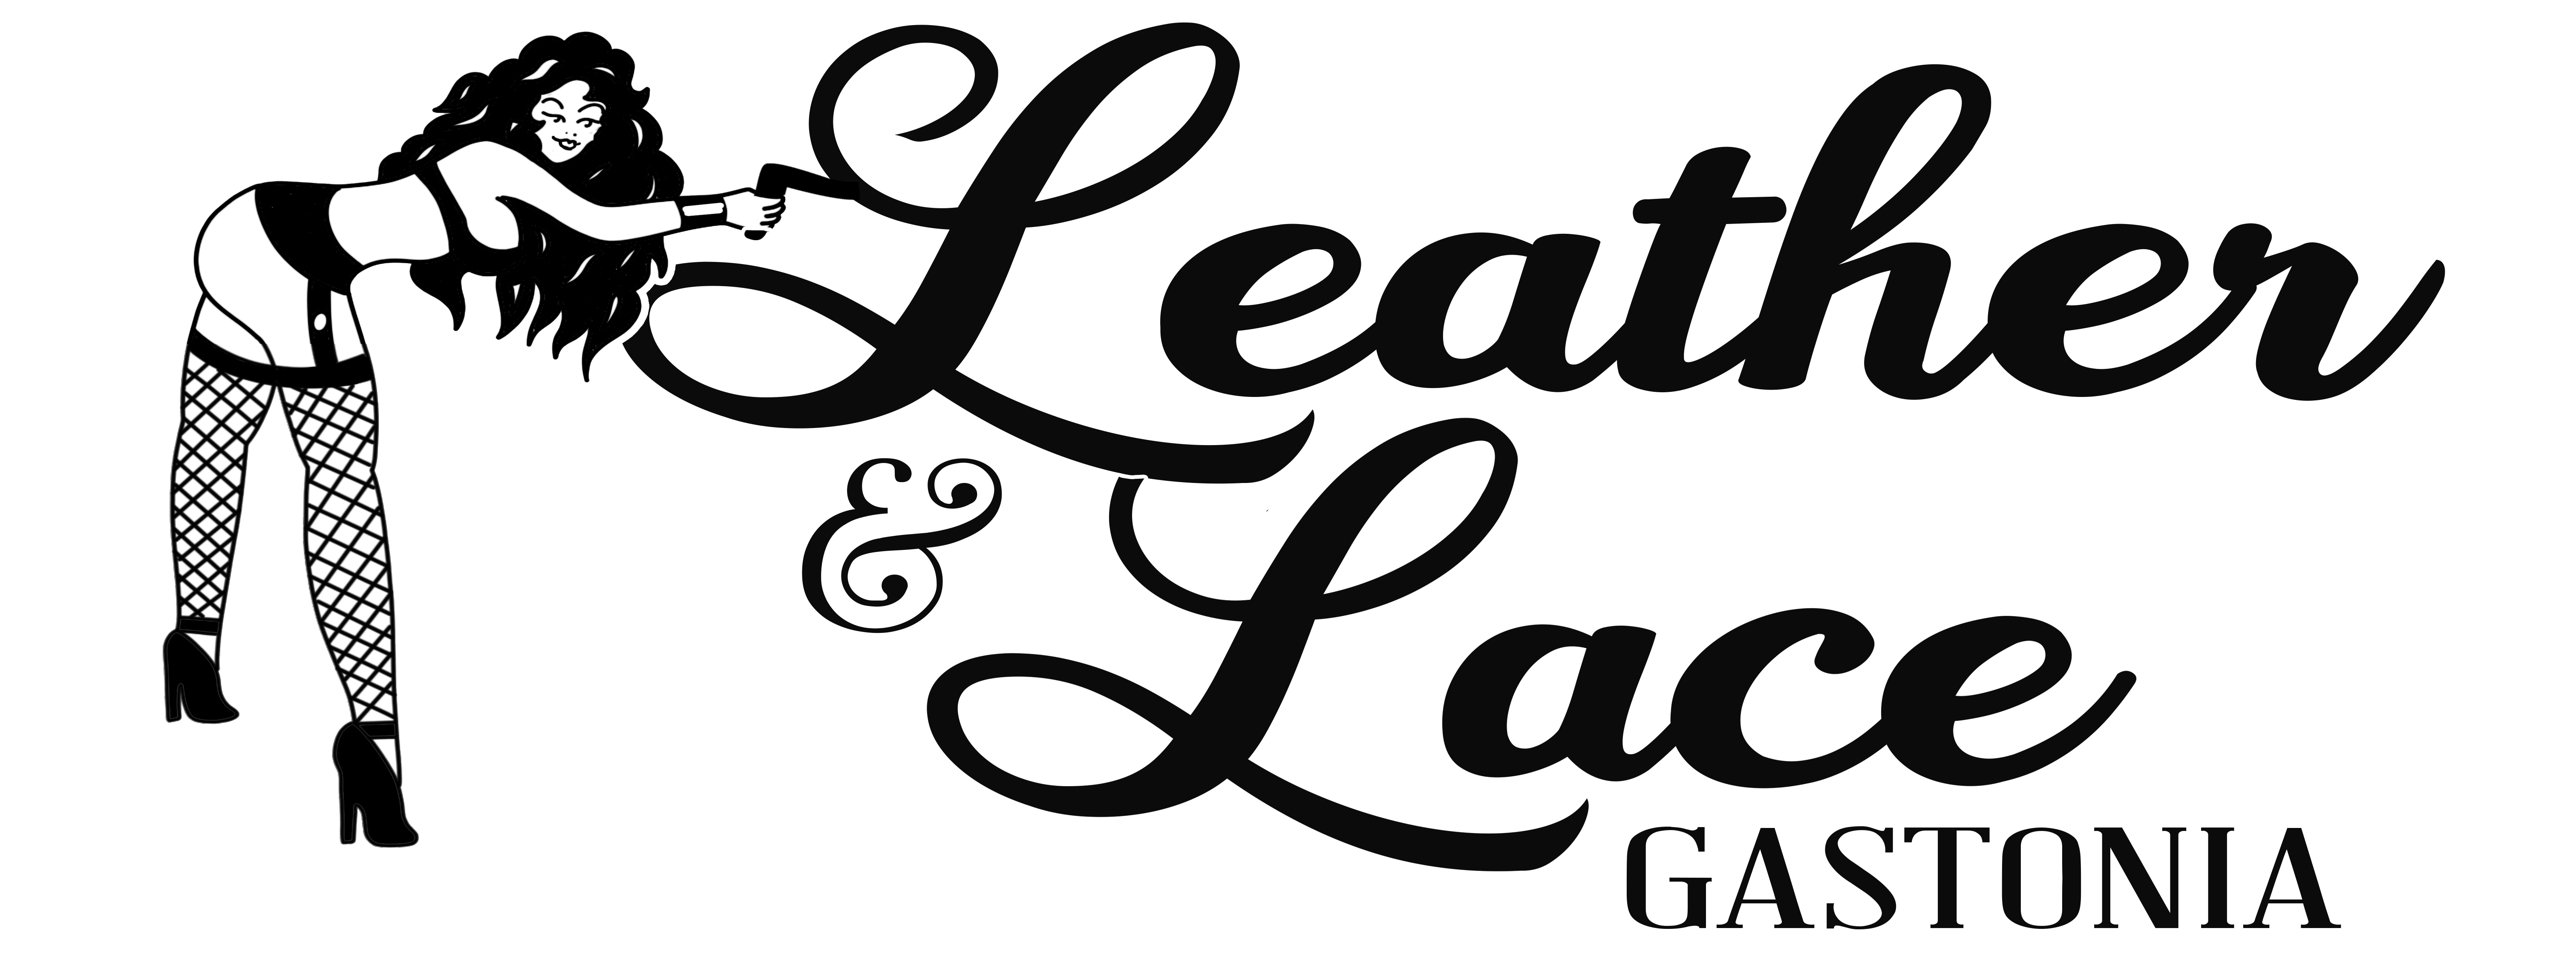 Leather & Lace - Gastonia